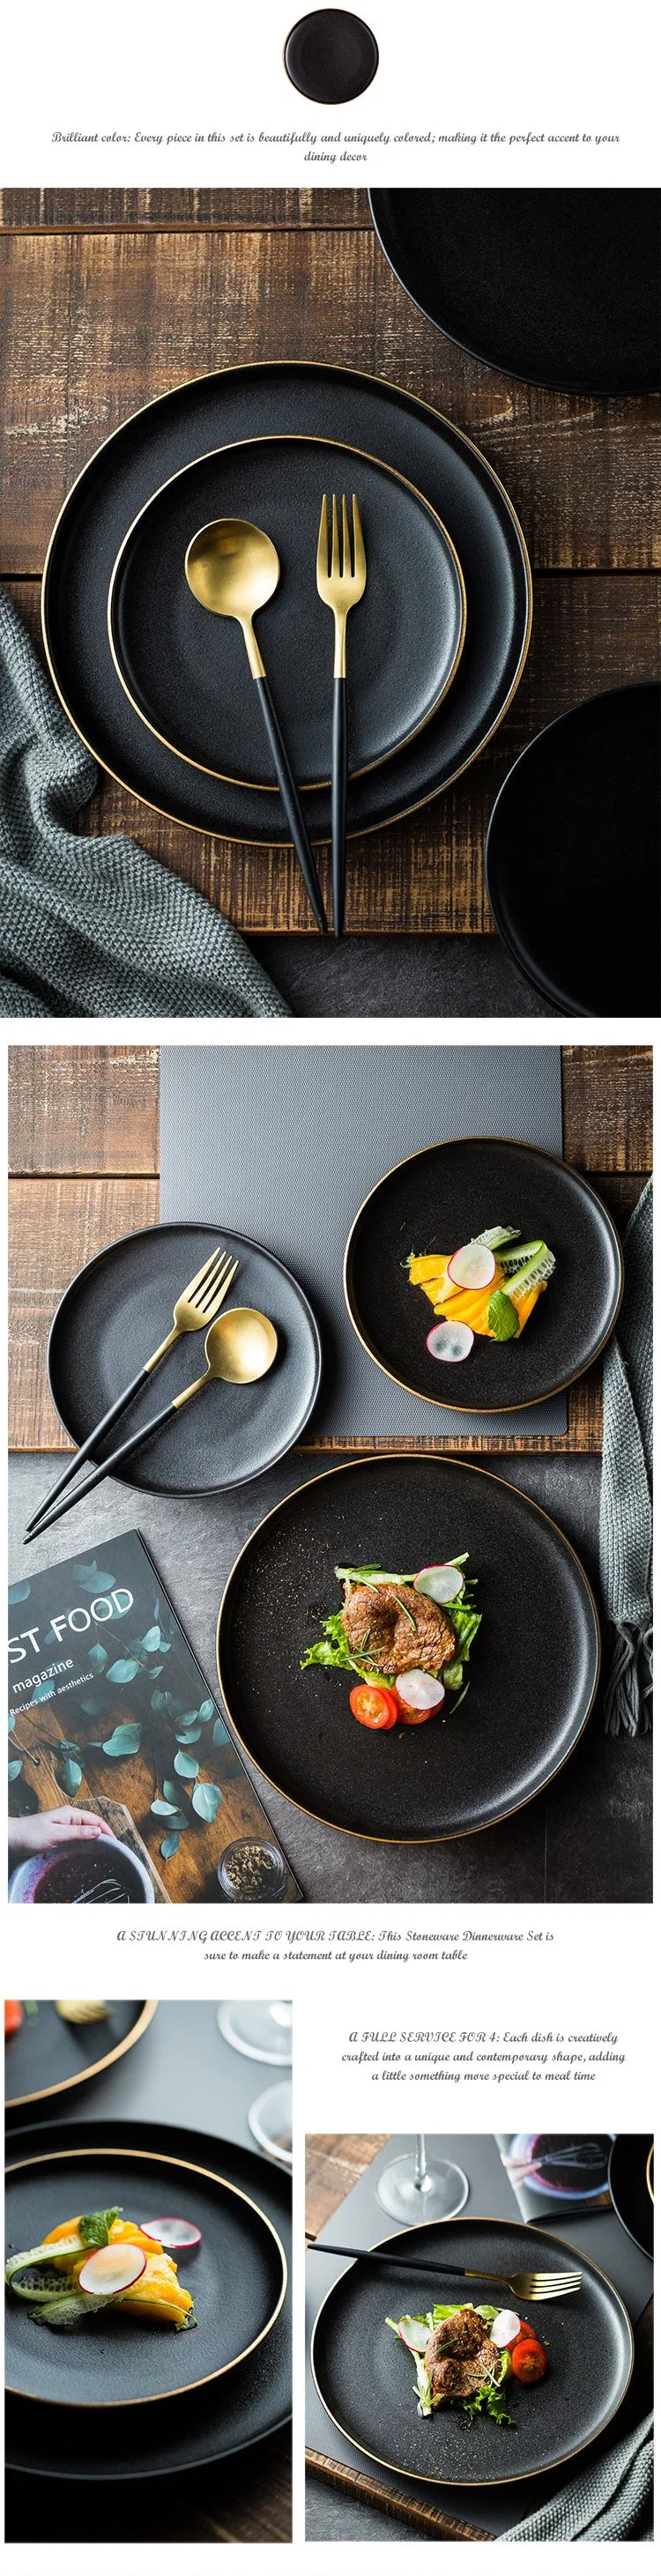 Wholesale Customized Plate Restaurant Crockery Plates Tableware for Hotel Restaurant